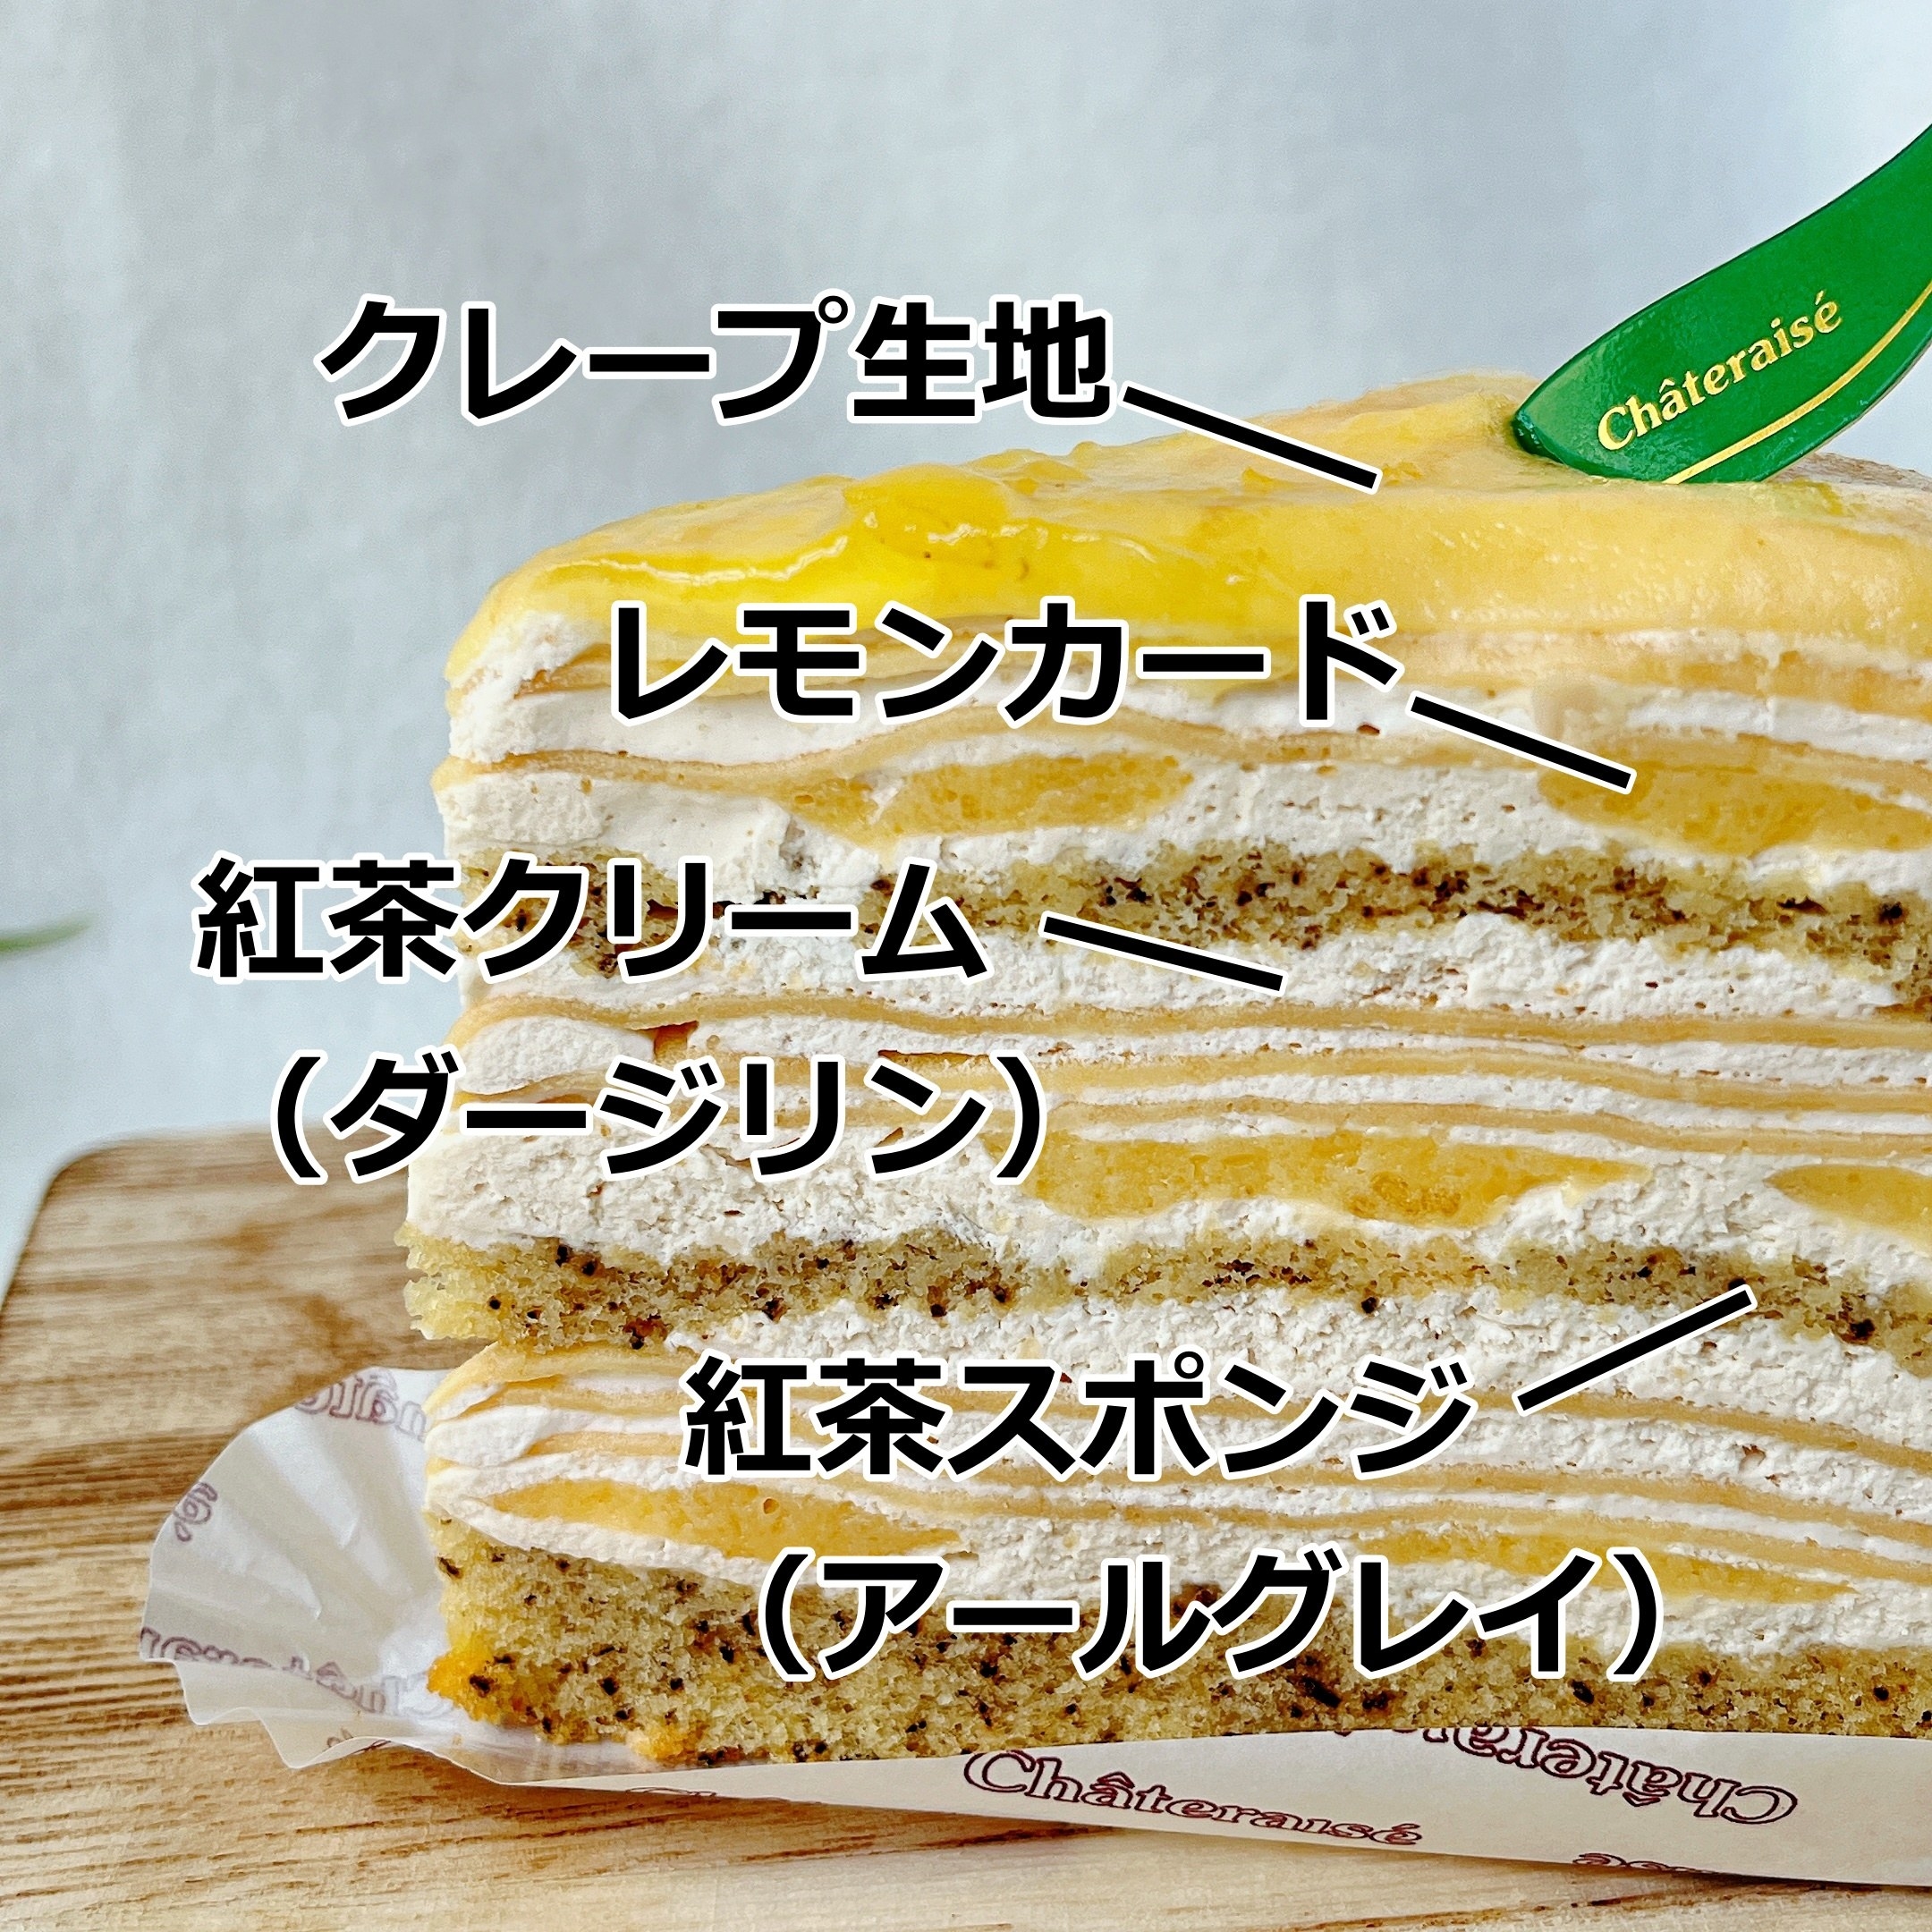 Châteraisé（シャトレーゼ）おすすめの季節限定ケーキ「瀬戸内レモンと紅茶のクレープケーキ」